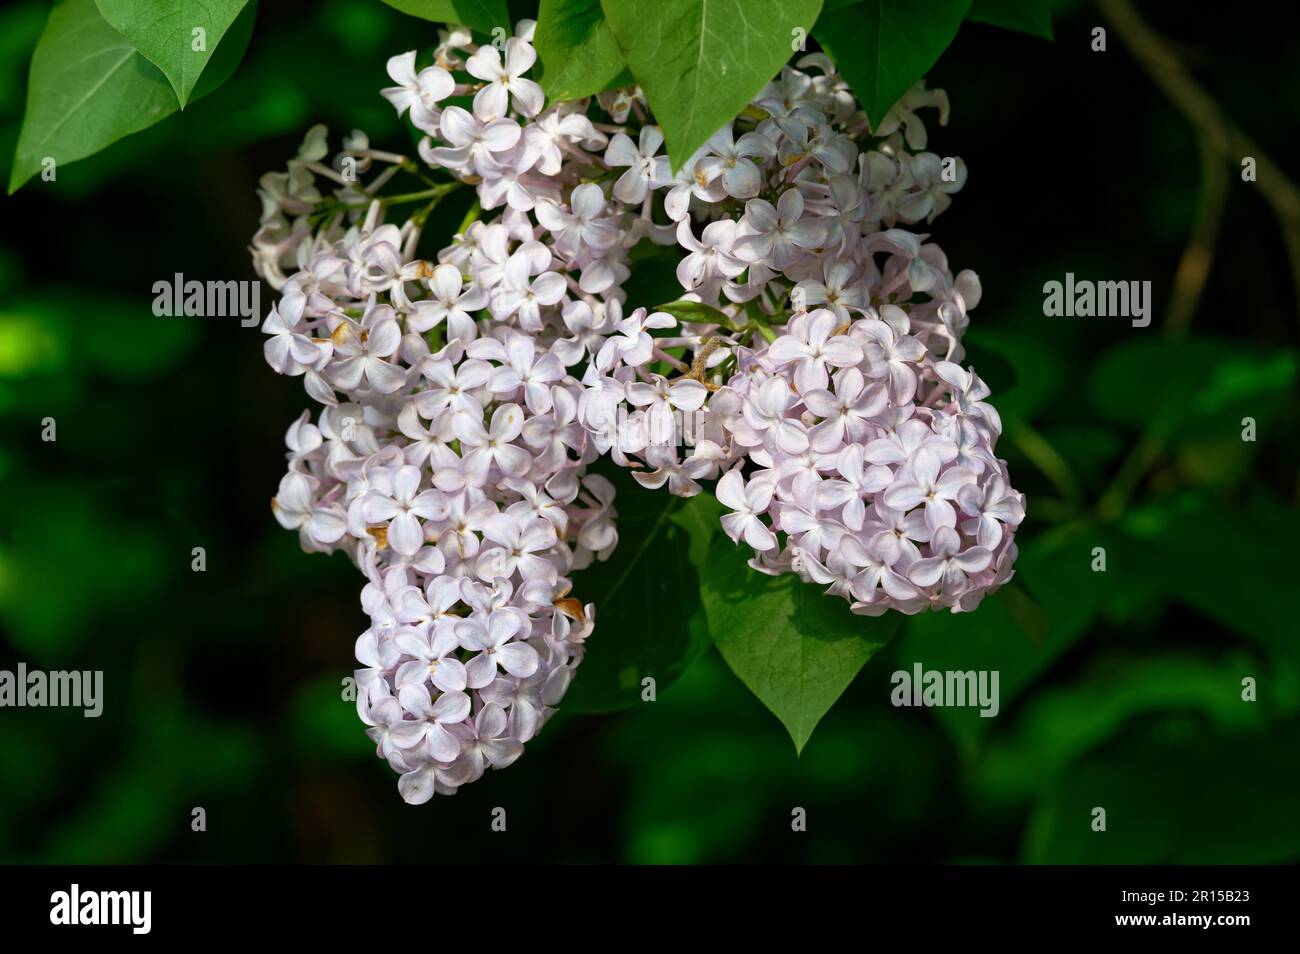 Syringa vulgaris blooming bright lilac flowers against dark blurred background Stock Photo